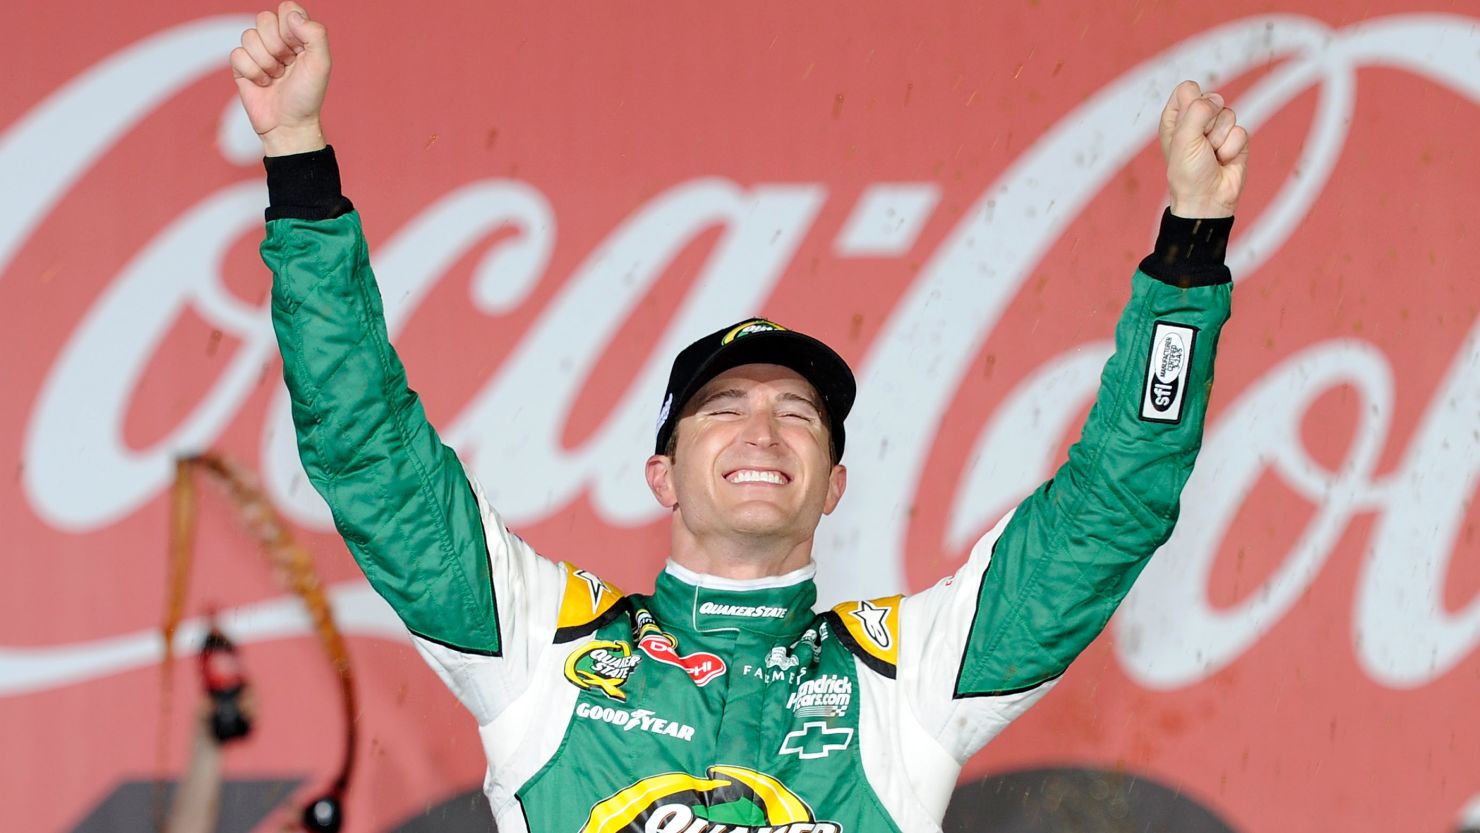 Kasey Kahne celebrates after winning the Coca-Cola 600 at Charlotte Motor Speedway on Sunday.